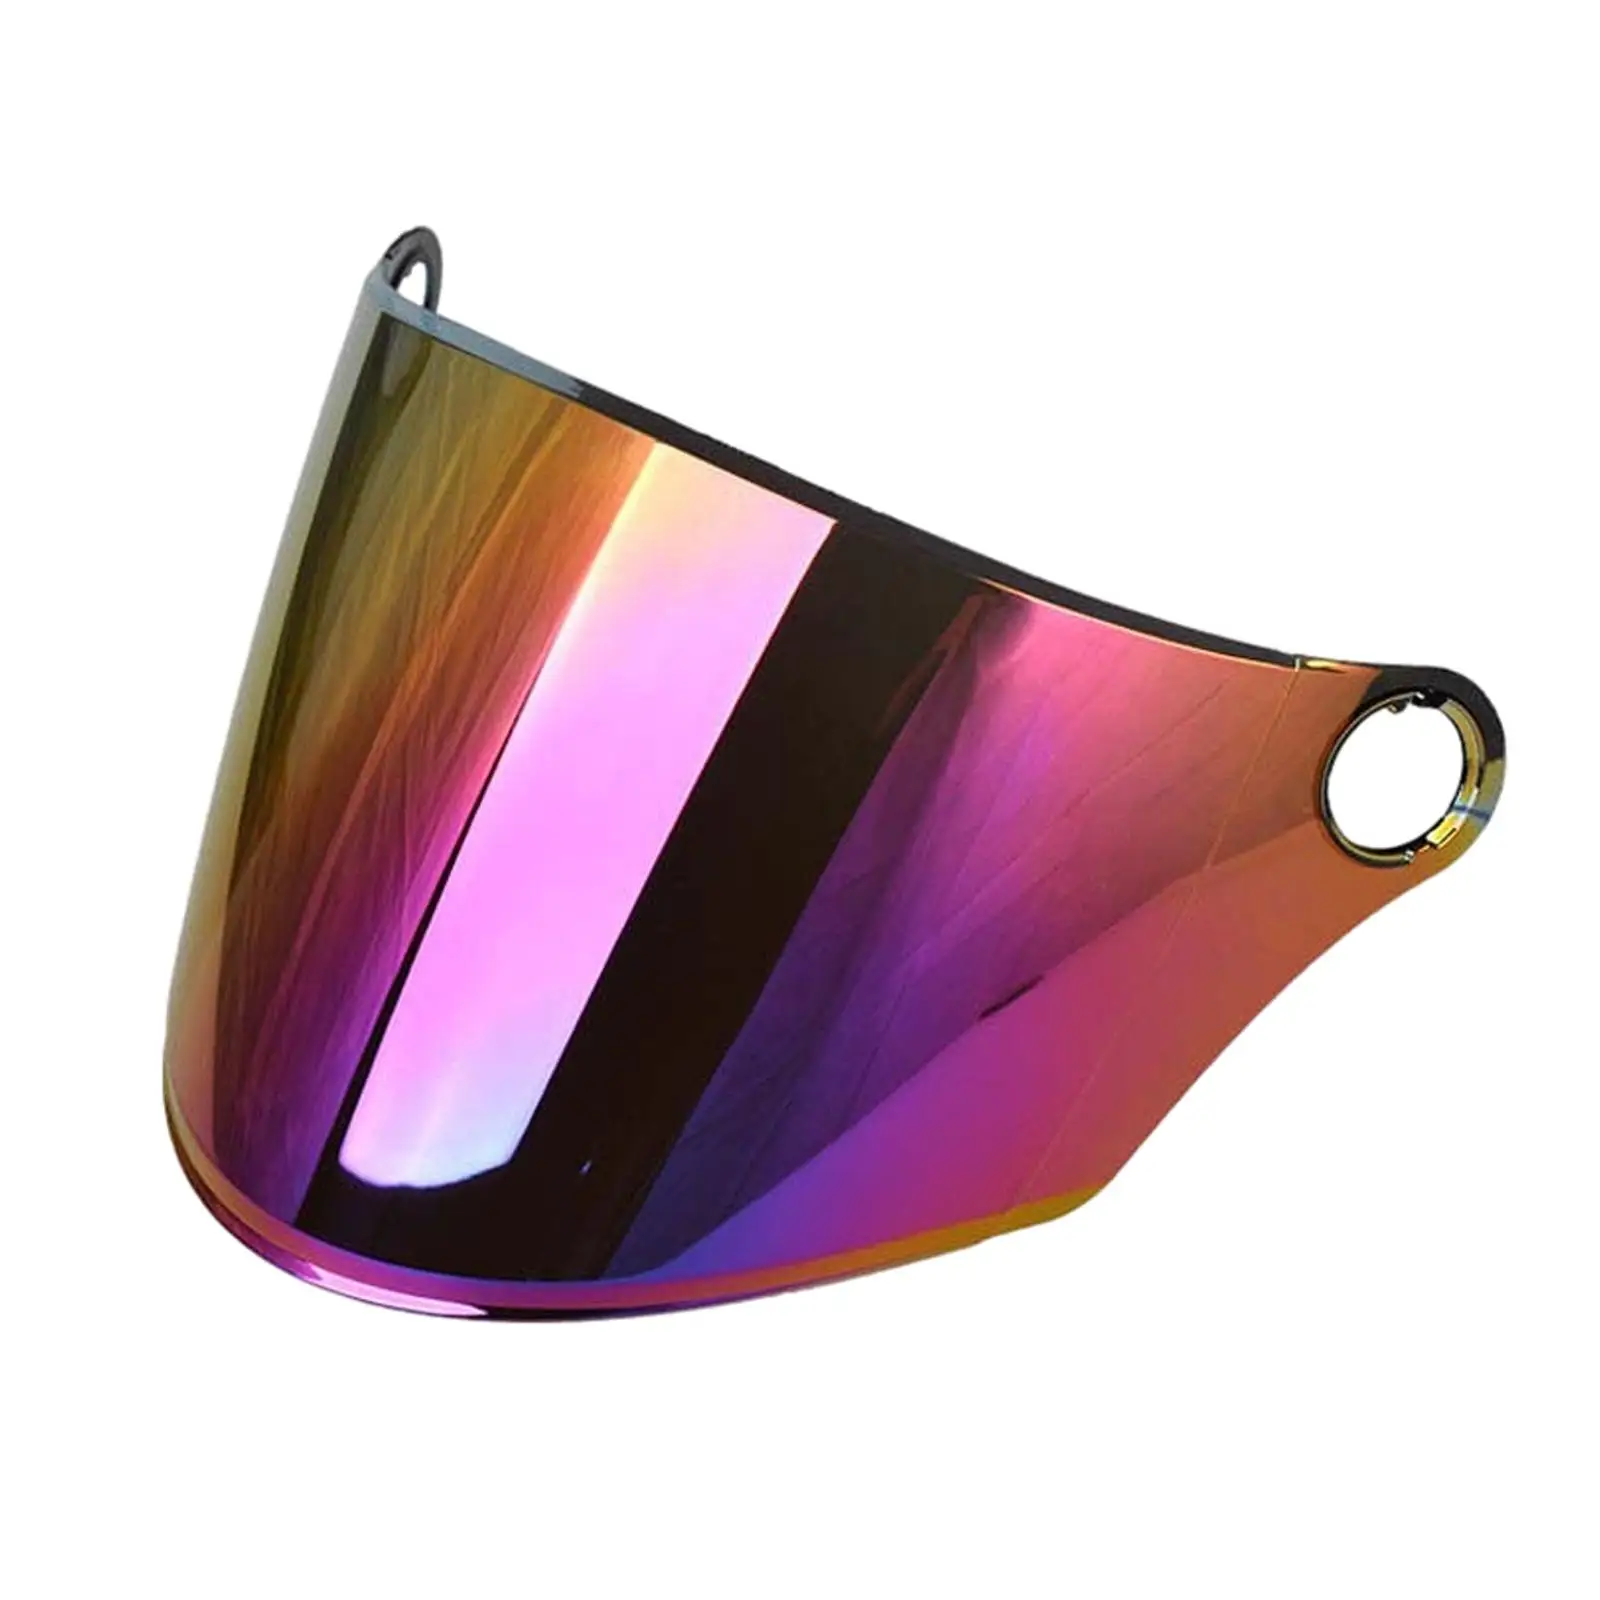 Universal Shield Visor Lens Colorful Wind Shield Fit for Motorcycle Helmet